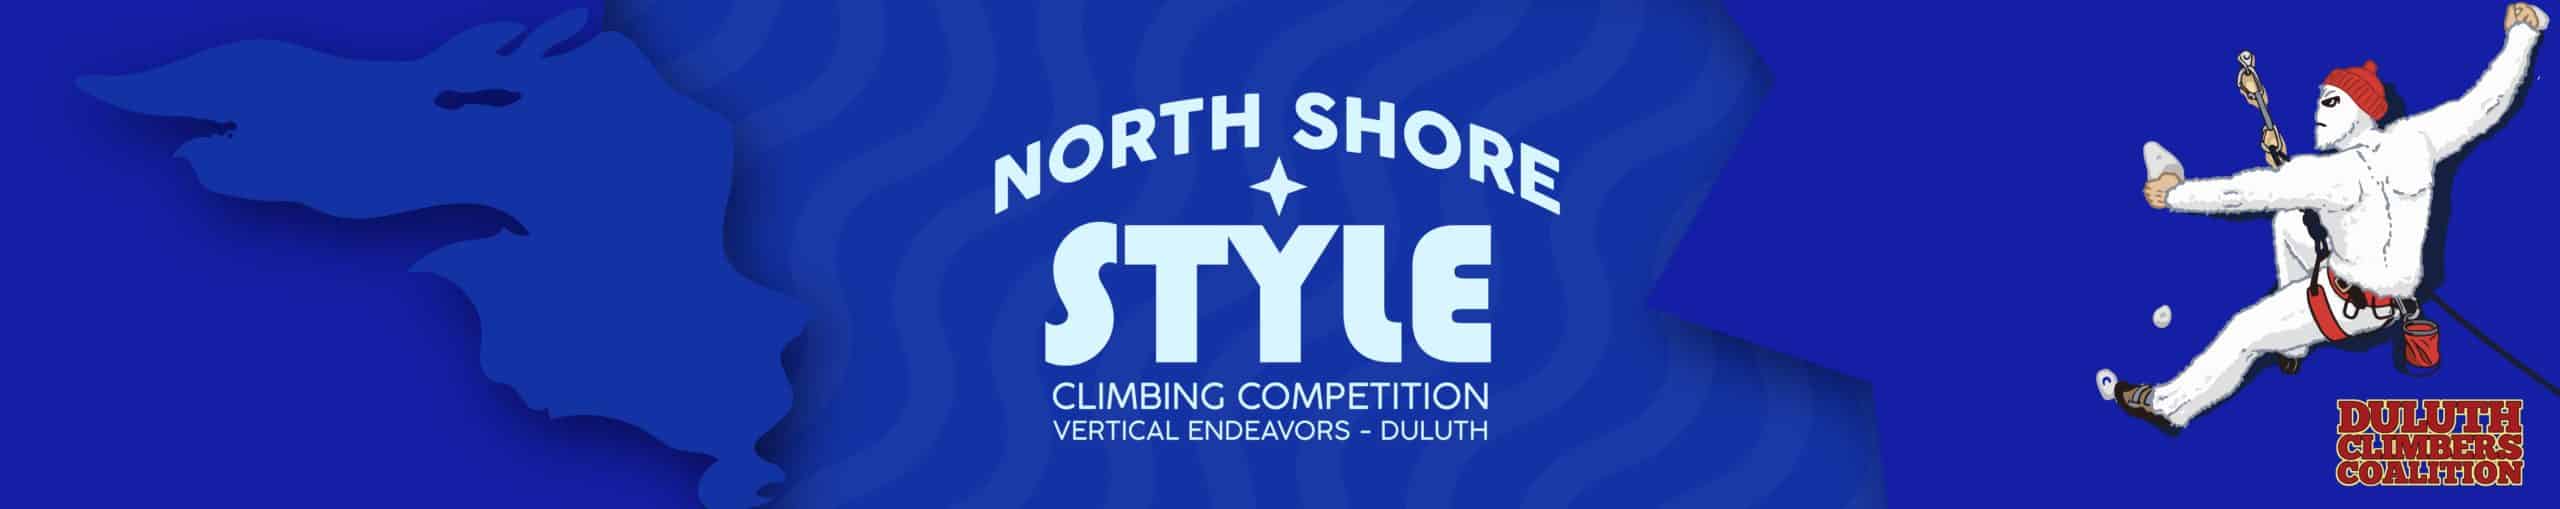 NorthShoreStyle_Digital_Banner